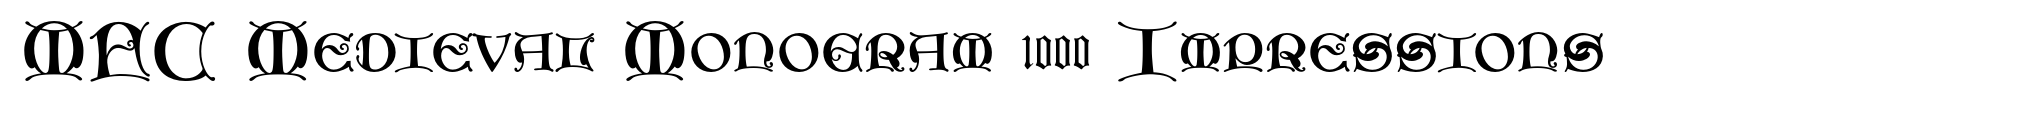 MFC Medieval Monogram 1000 Impressions image